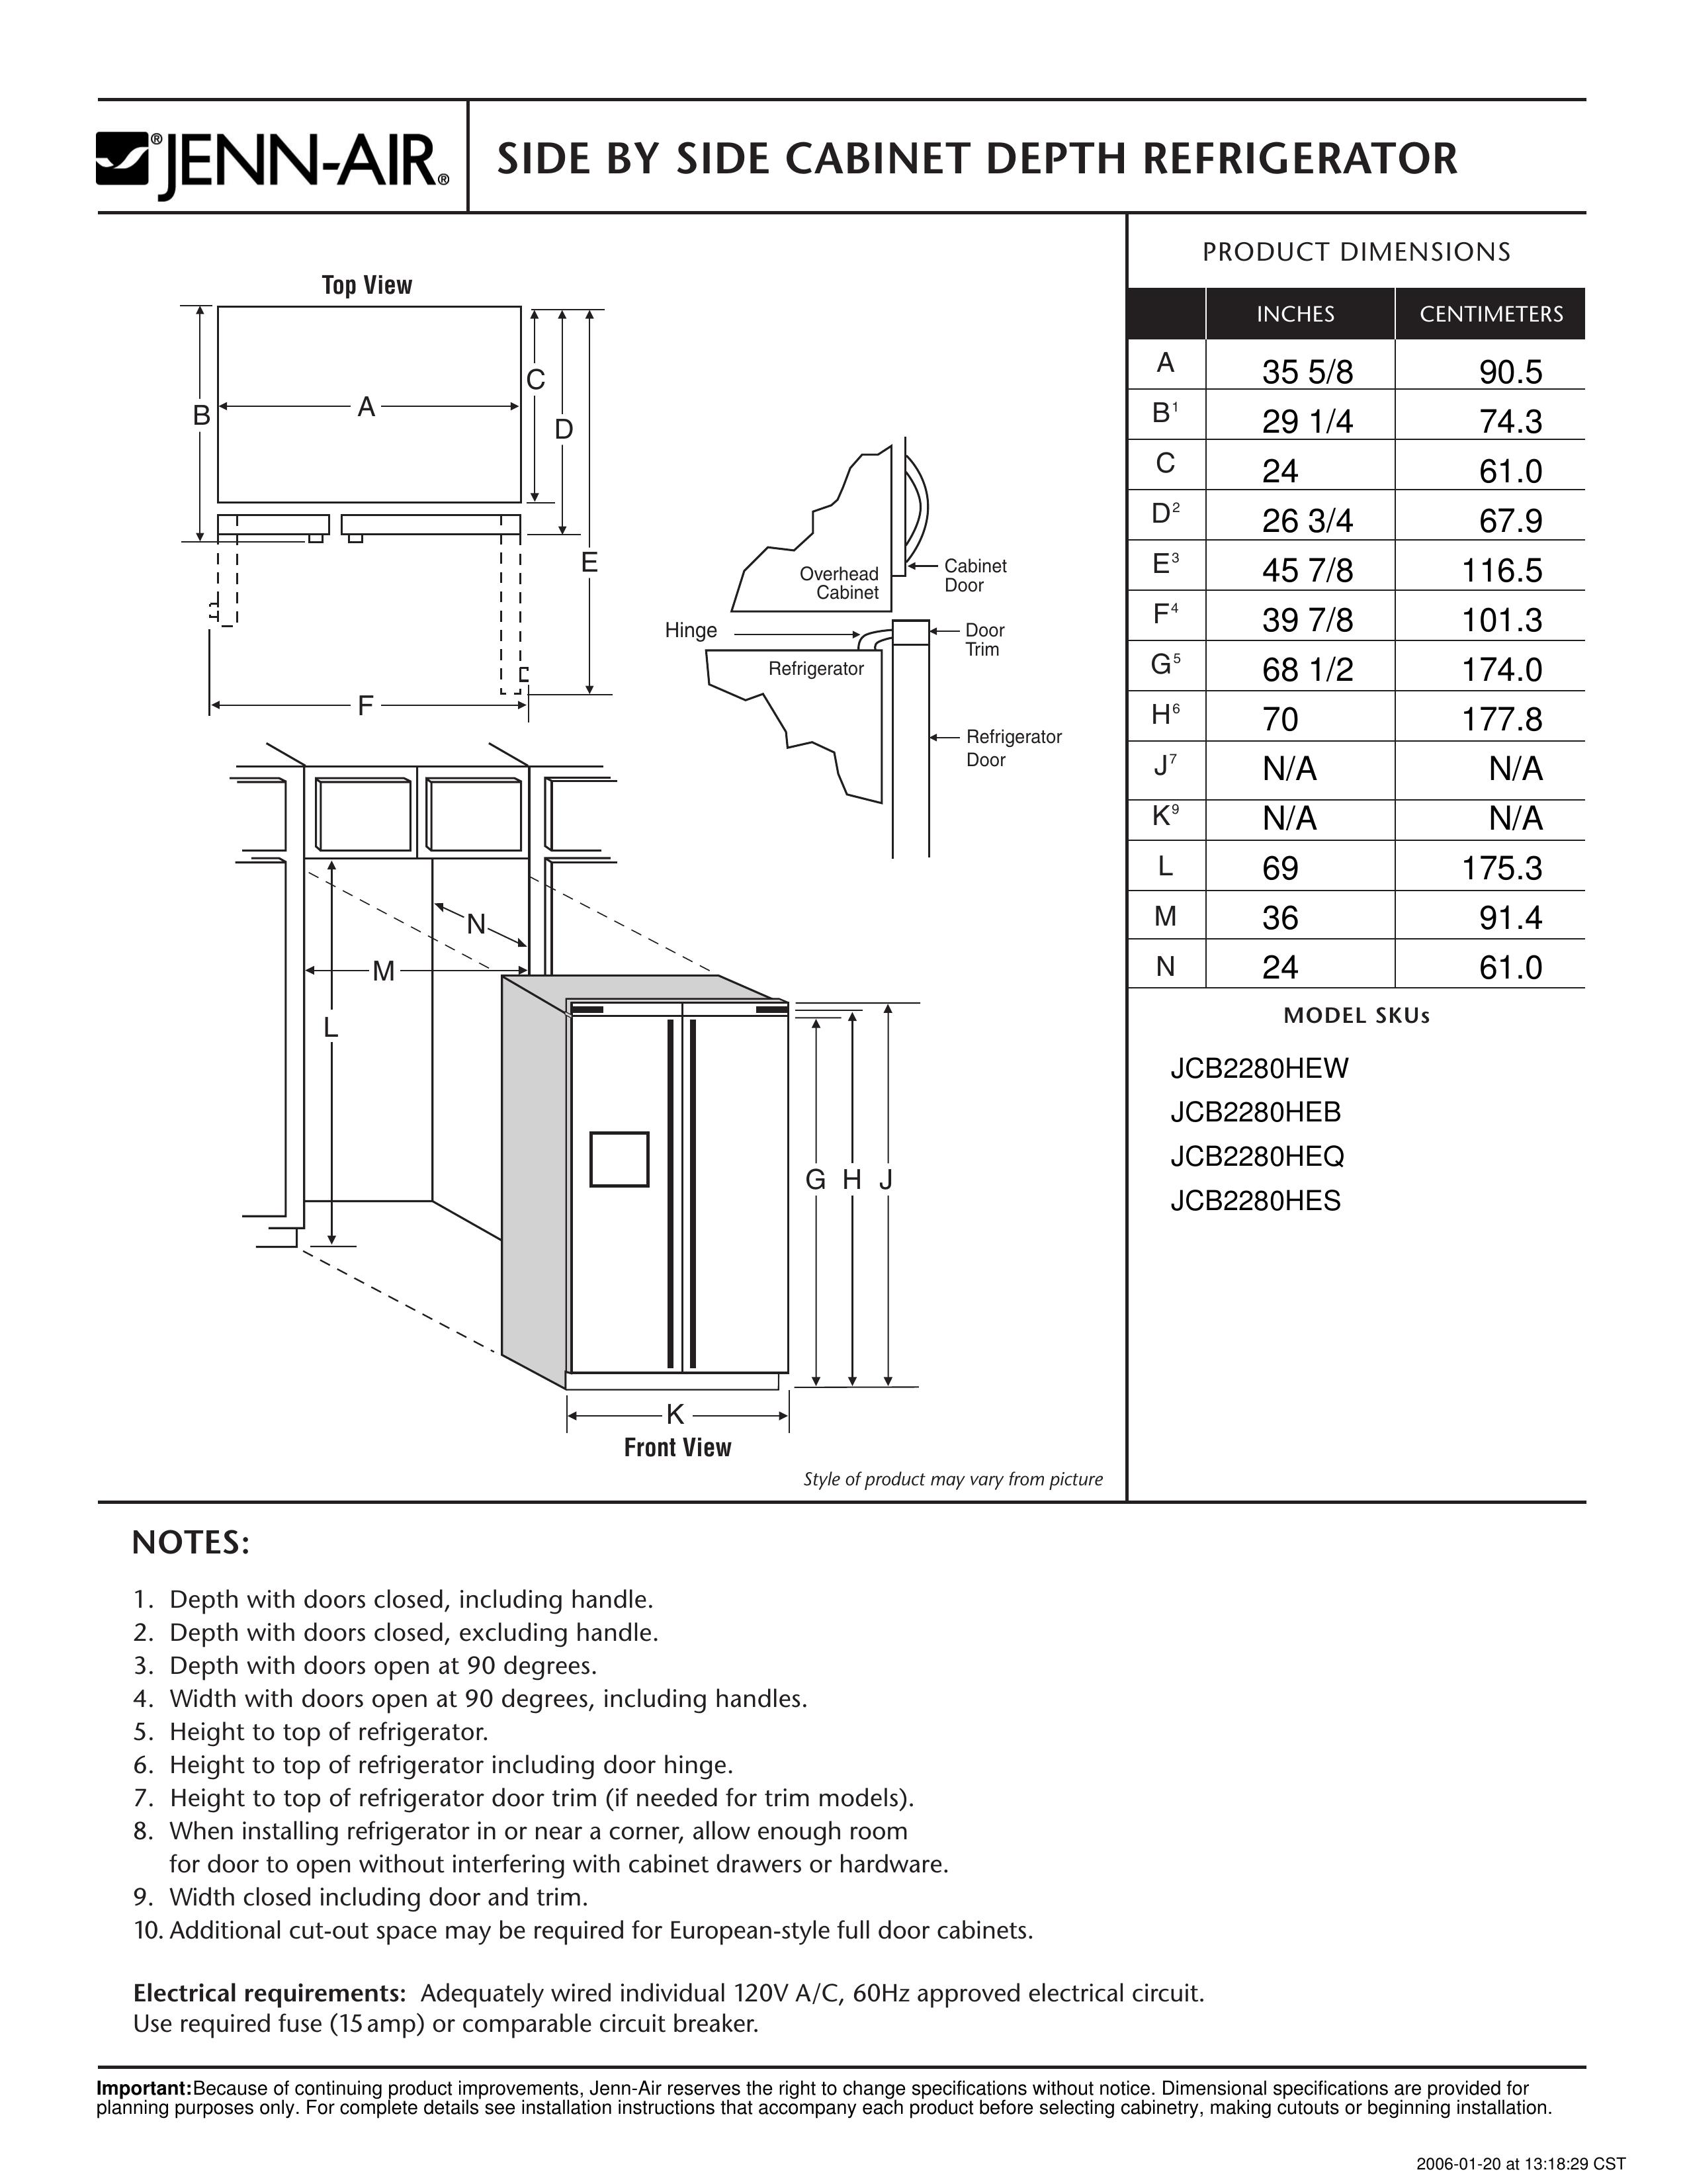 Jenn-Air JCB2280HES Refrigerator User Manual